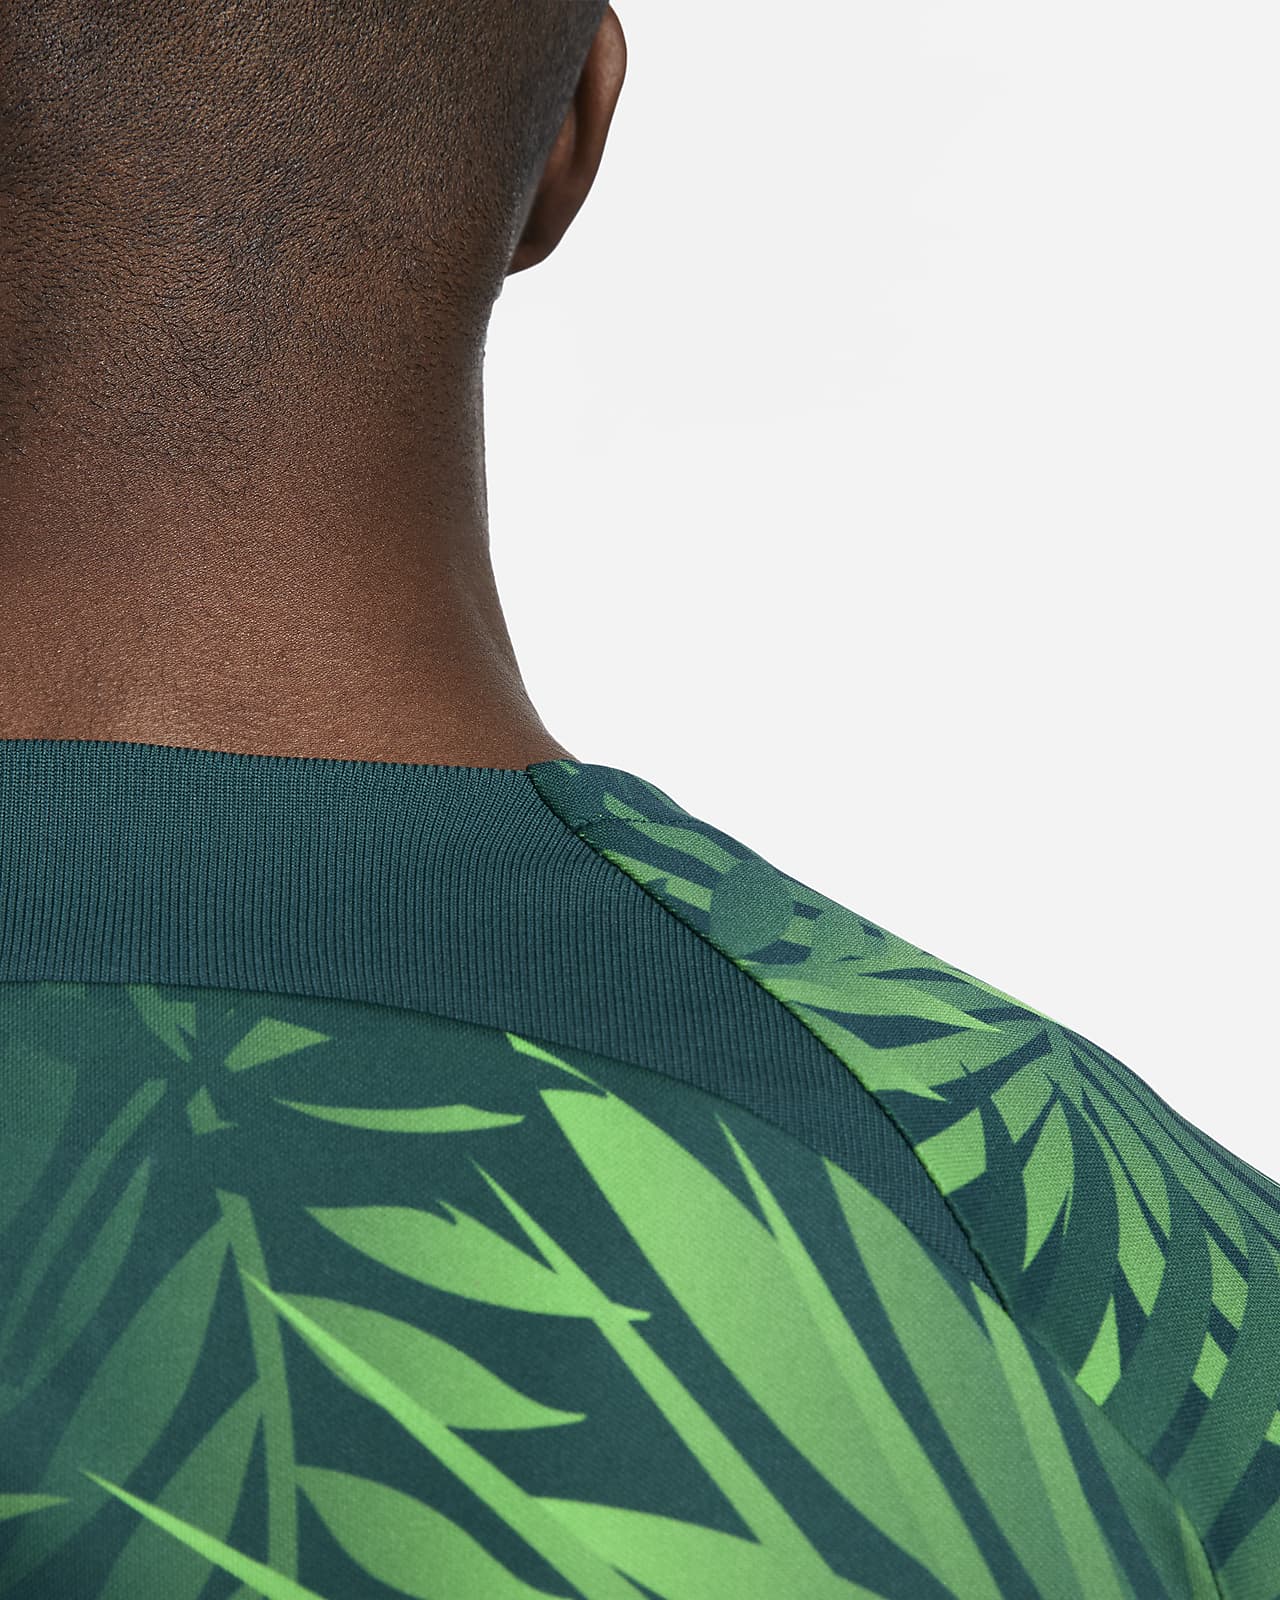 Brazil 2022y football training shirt jersey camisa Nike 100% cotton size XL  NWT